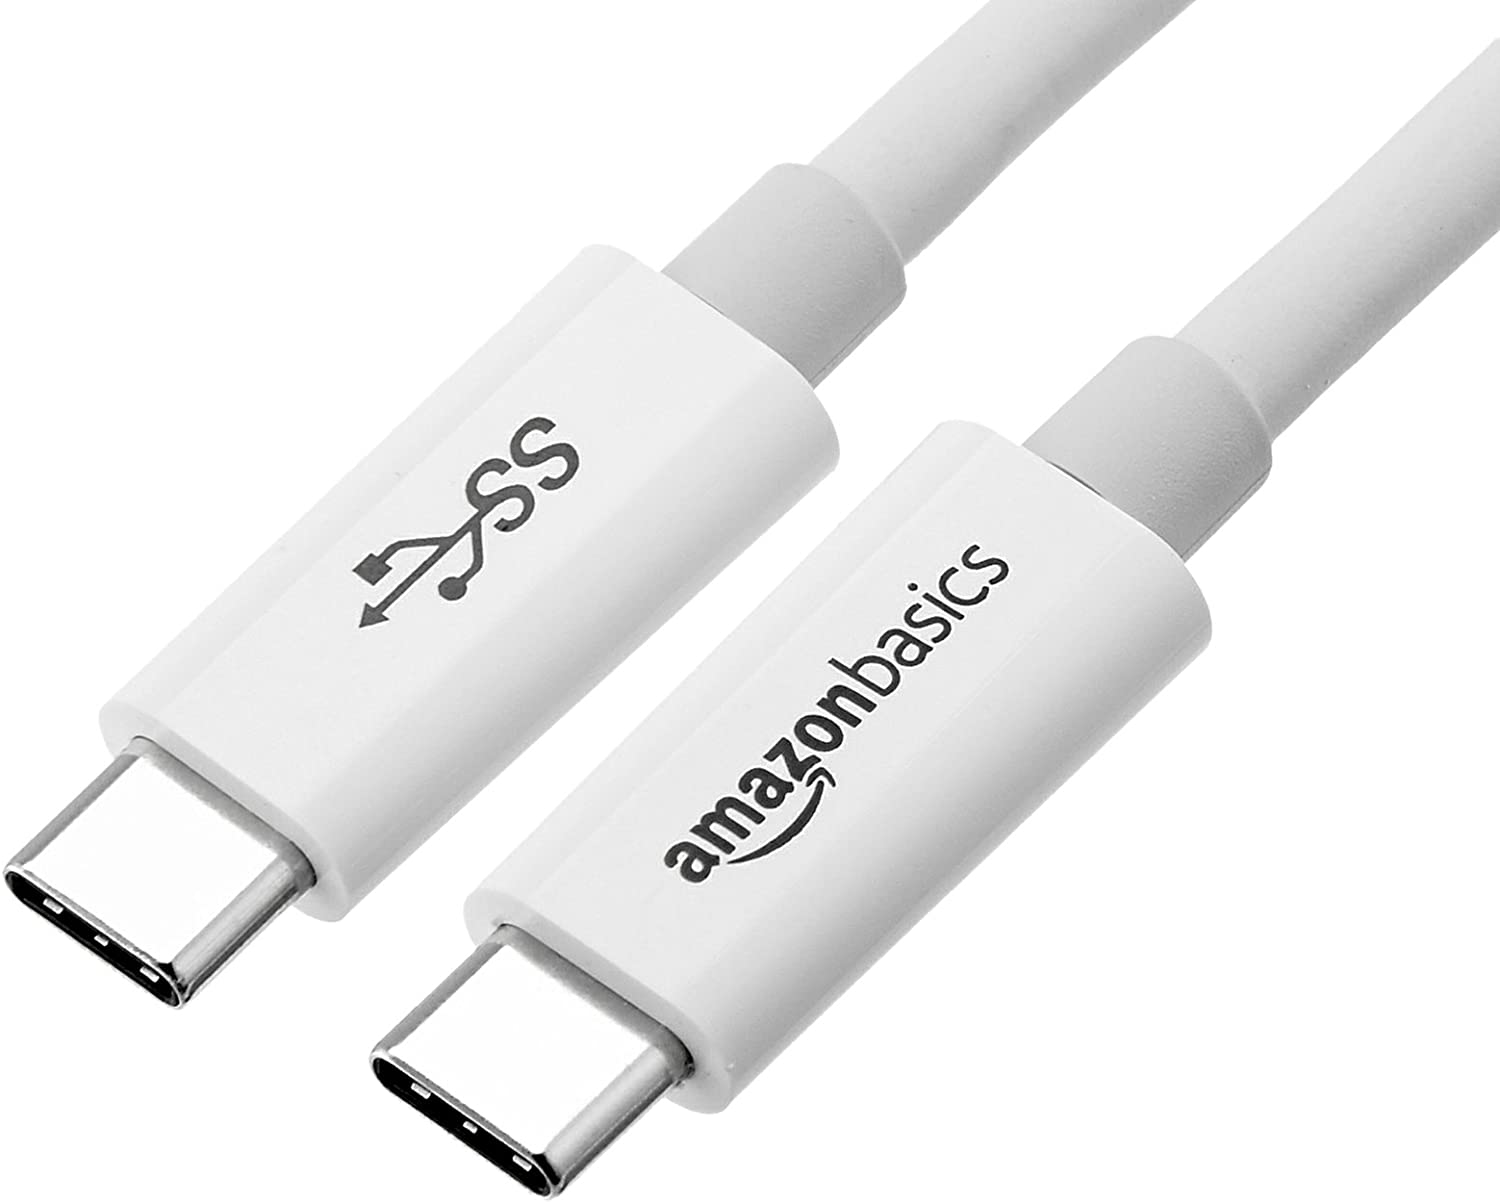 Amazon Basics USB-C USB 6-oplaadkabel van 3.1 meter lang